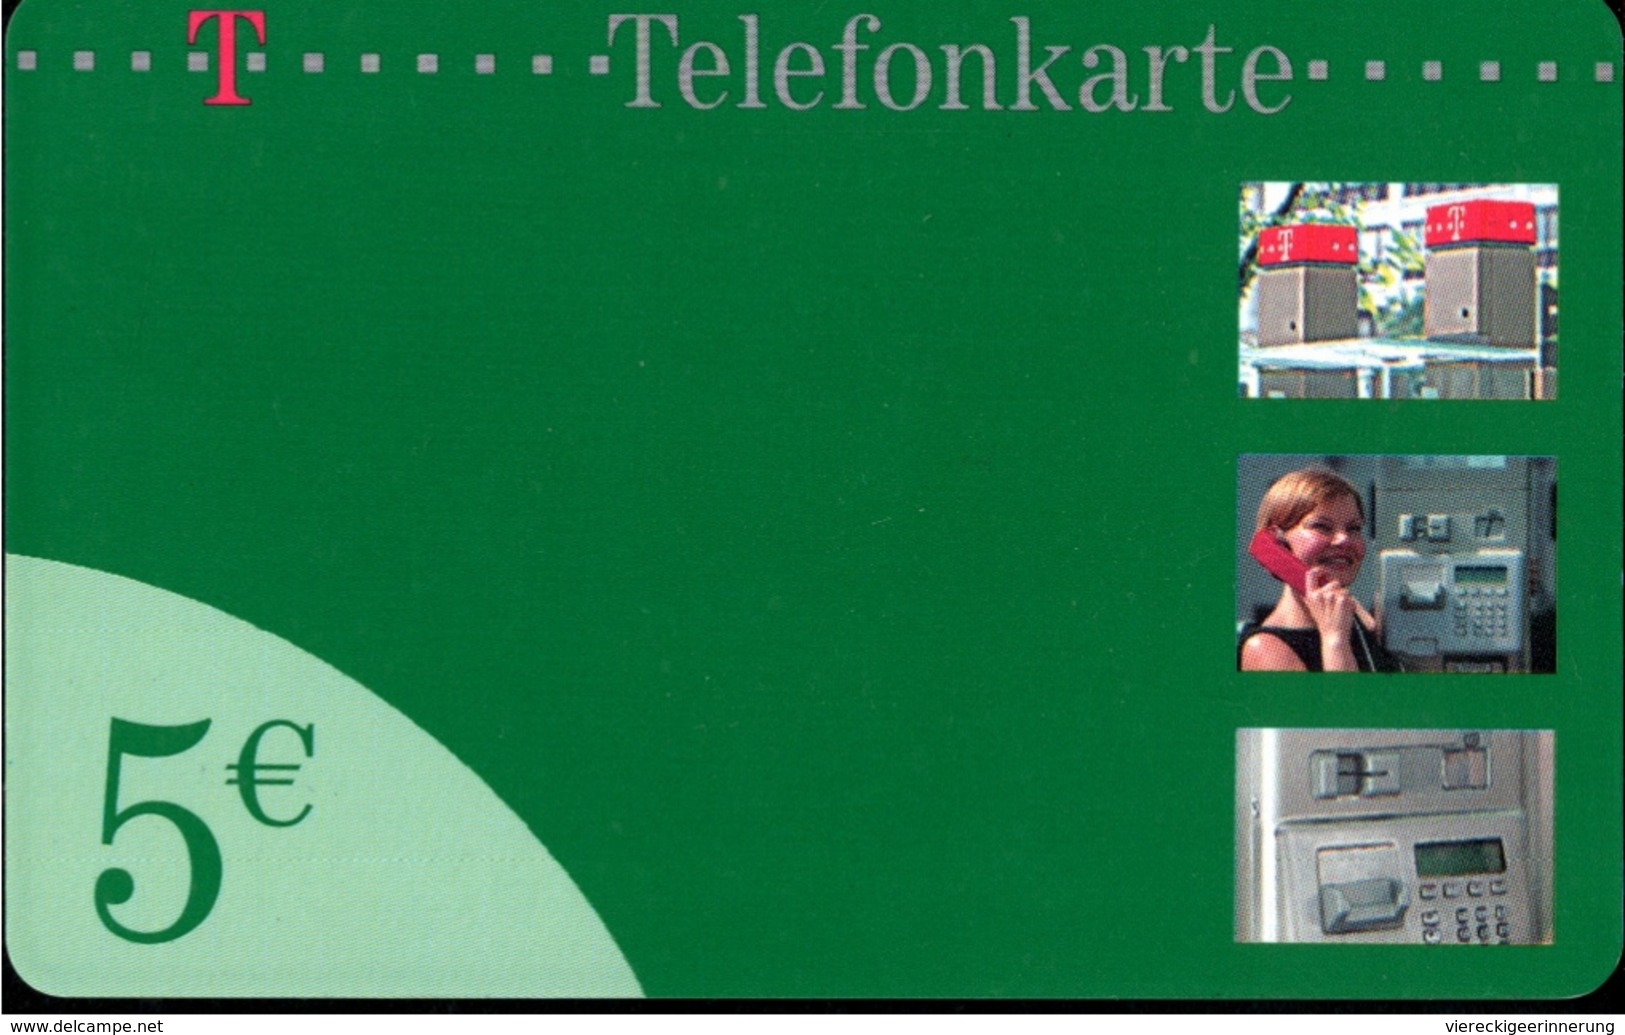 ! 5 € Telefonkarte, Telecarte, Phonecard, 2004, PD01, Germany - P & PD-Series: Schalterkarten Der Dt. Telekom